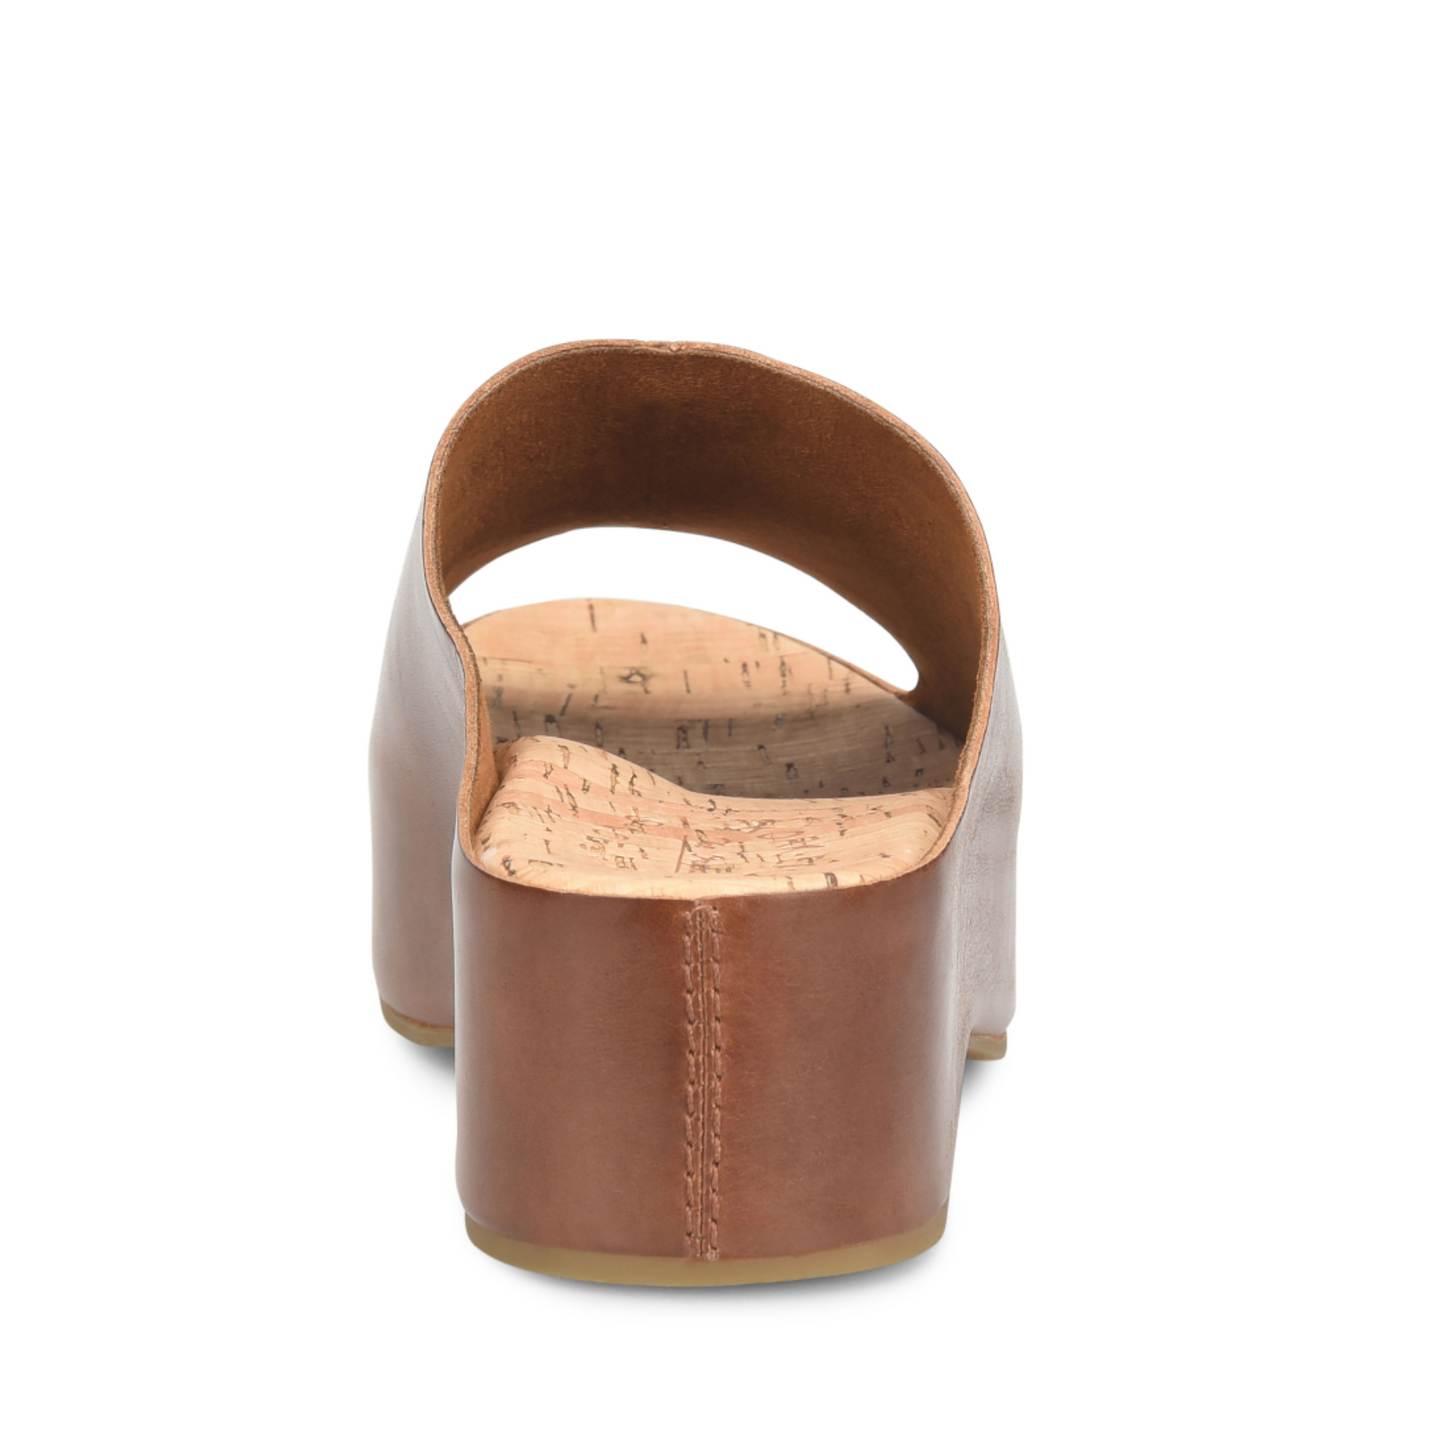 Back view of the Women's brown leather flatform slide sandal by Kork-Ease